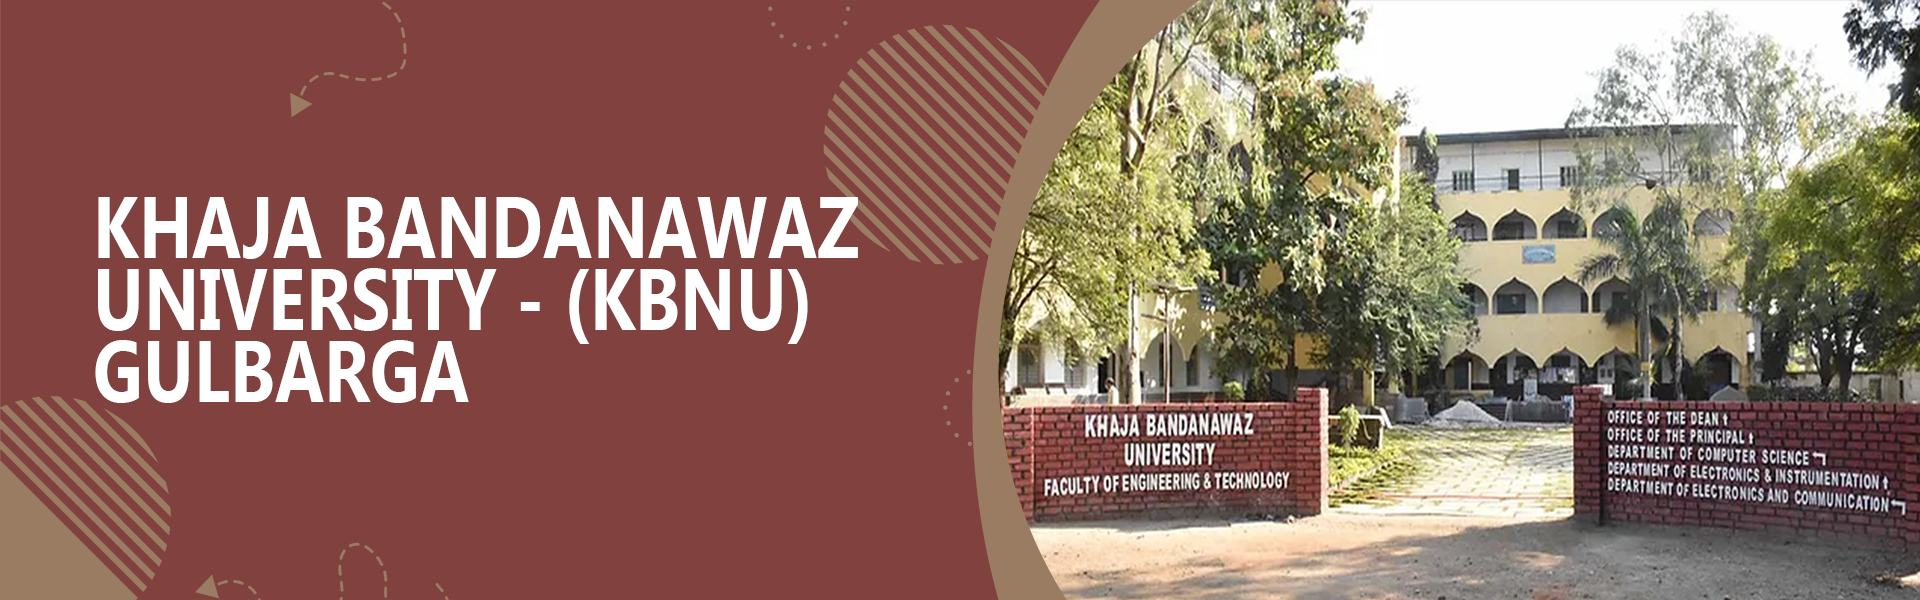 Khaja Bandanawaz University - (KBNU) Gulbarga